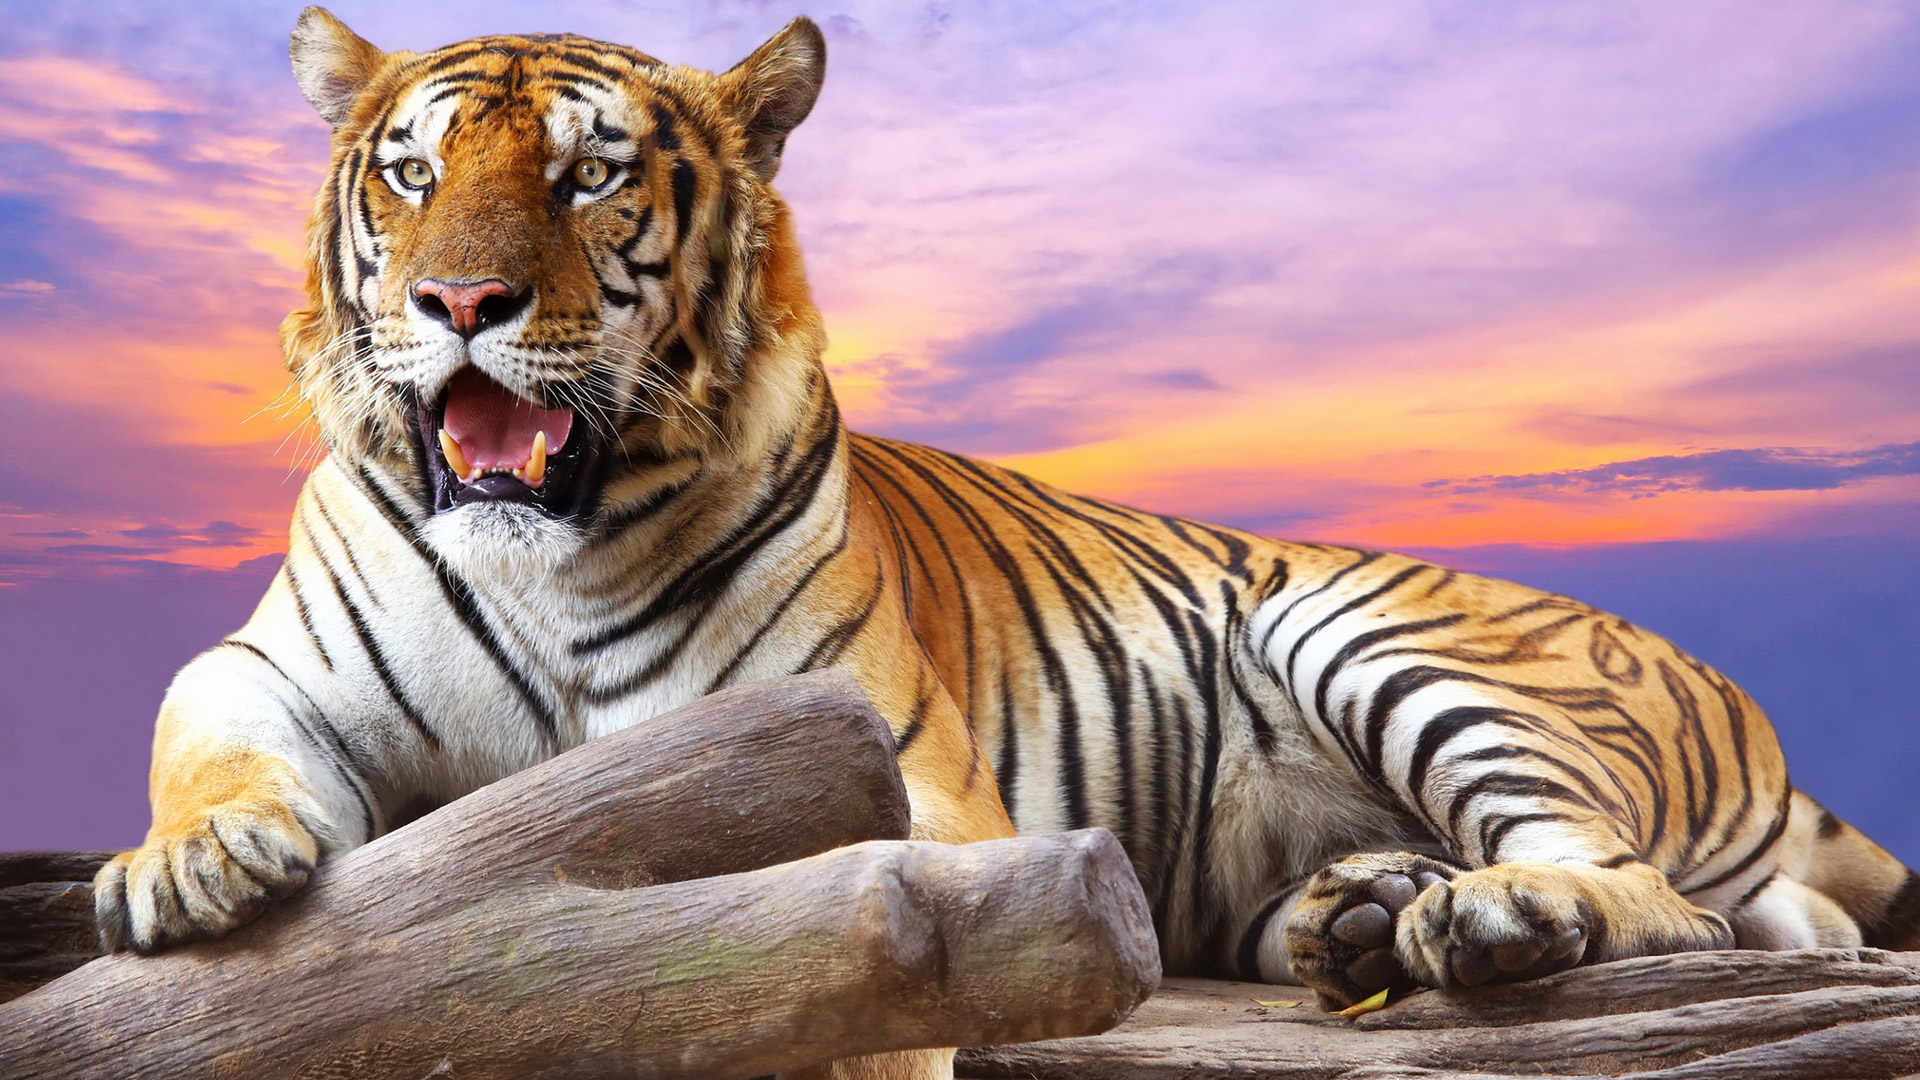 Tiger Background Images Hd Download